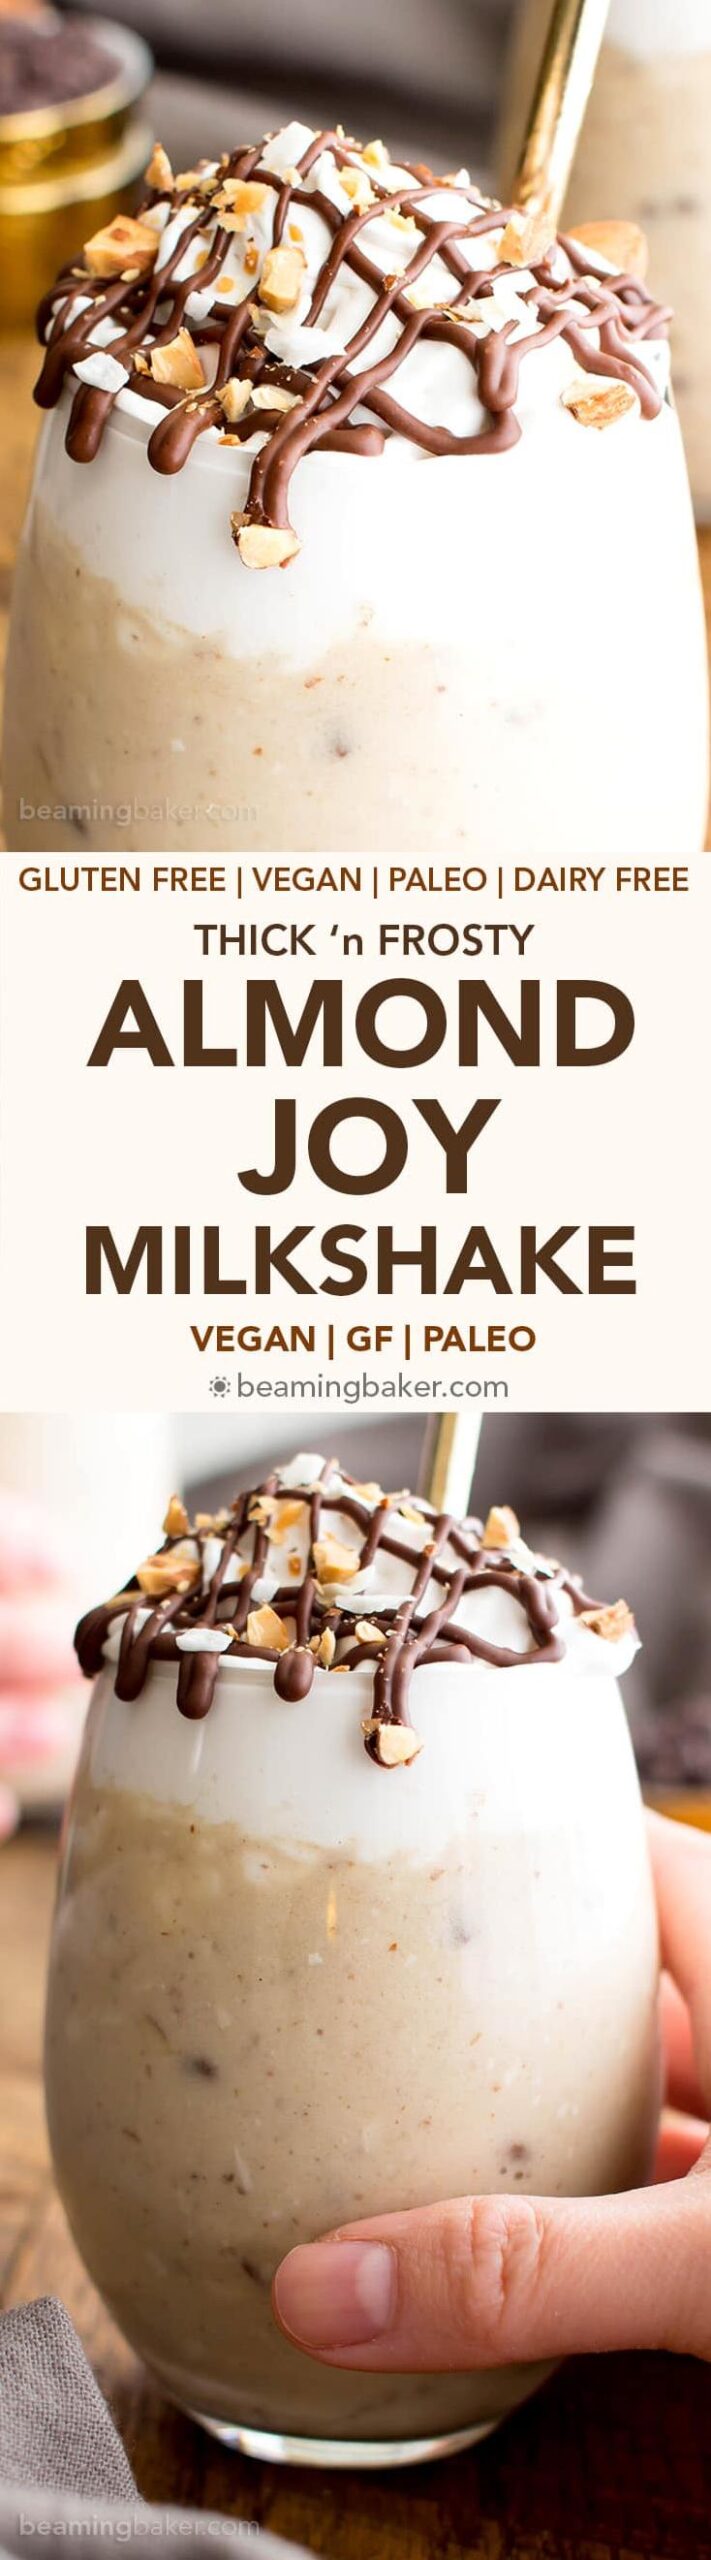  Say goodbye to unhealthy milkshakes and hello to this nutritious alternative.